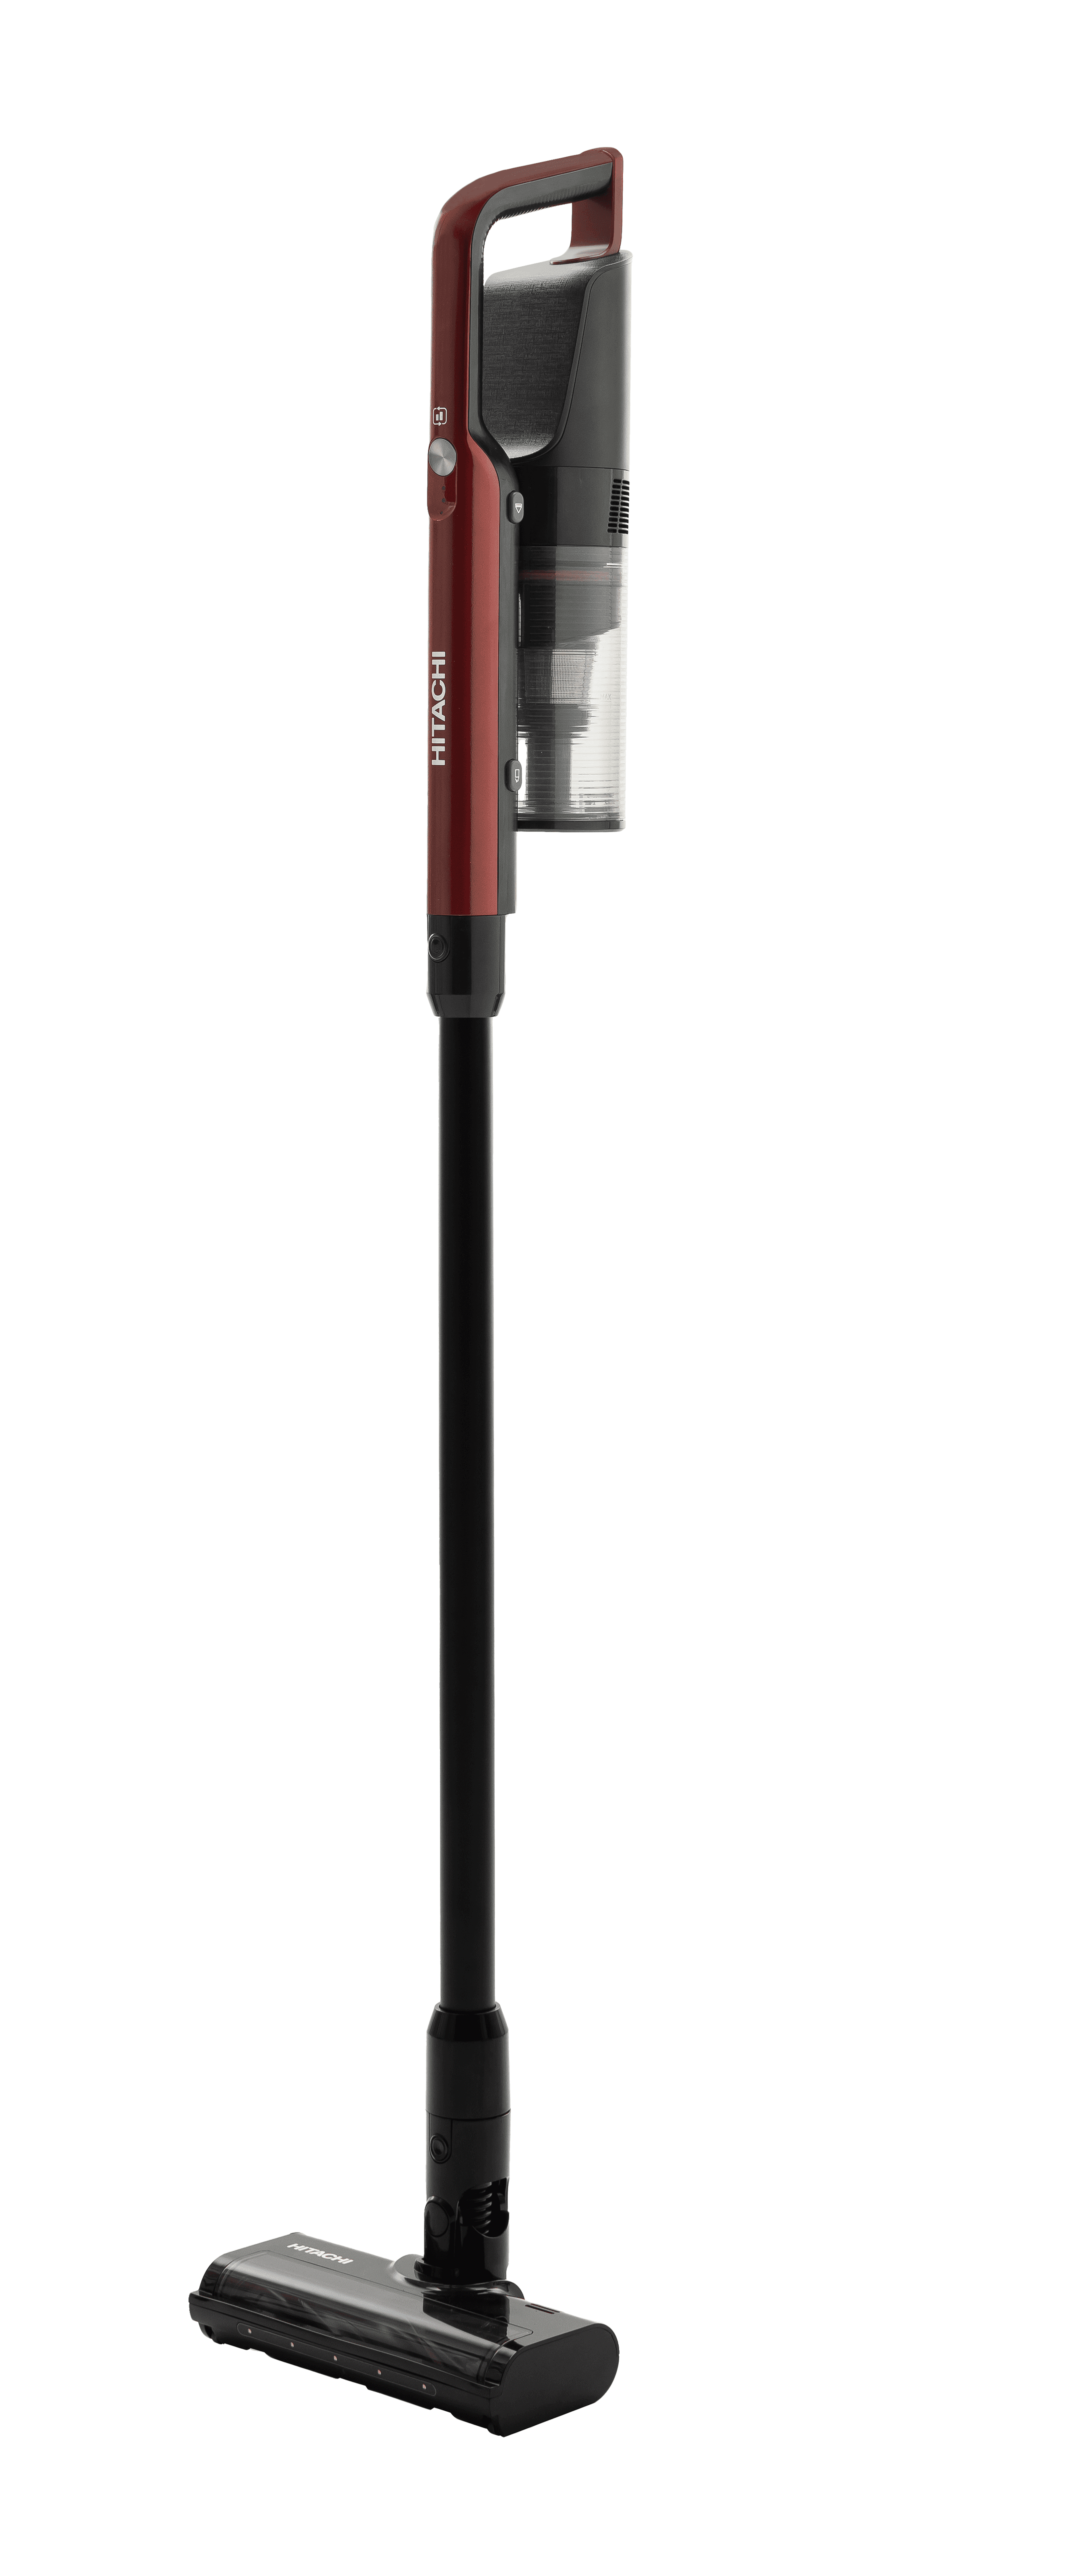 HITACHI Cordless Stick Vacuum Cleaner 110 W Model PV-X95N MRE Red